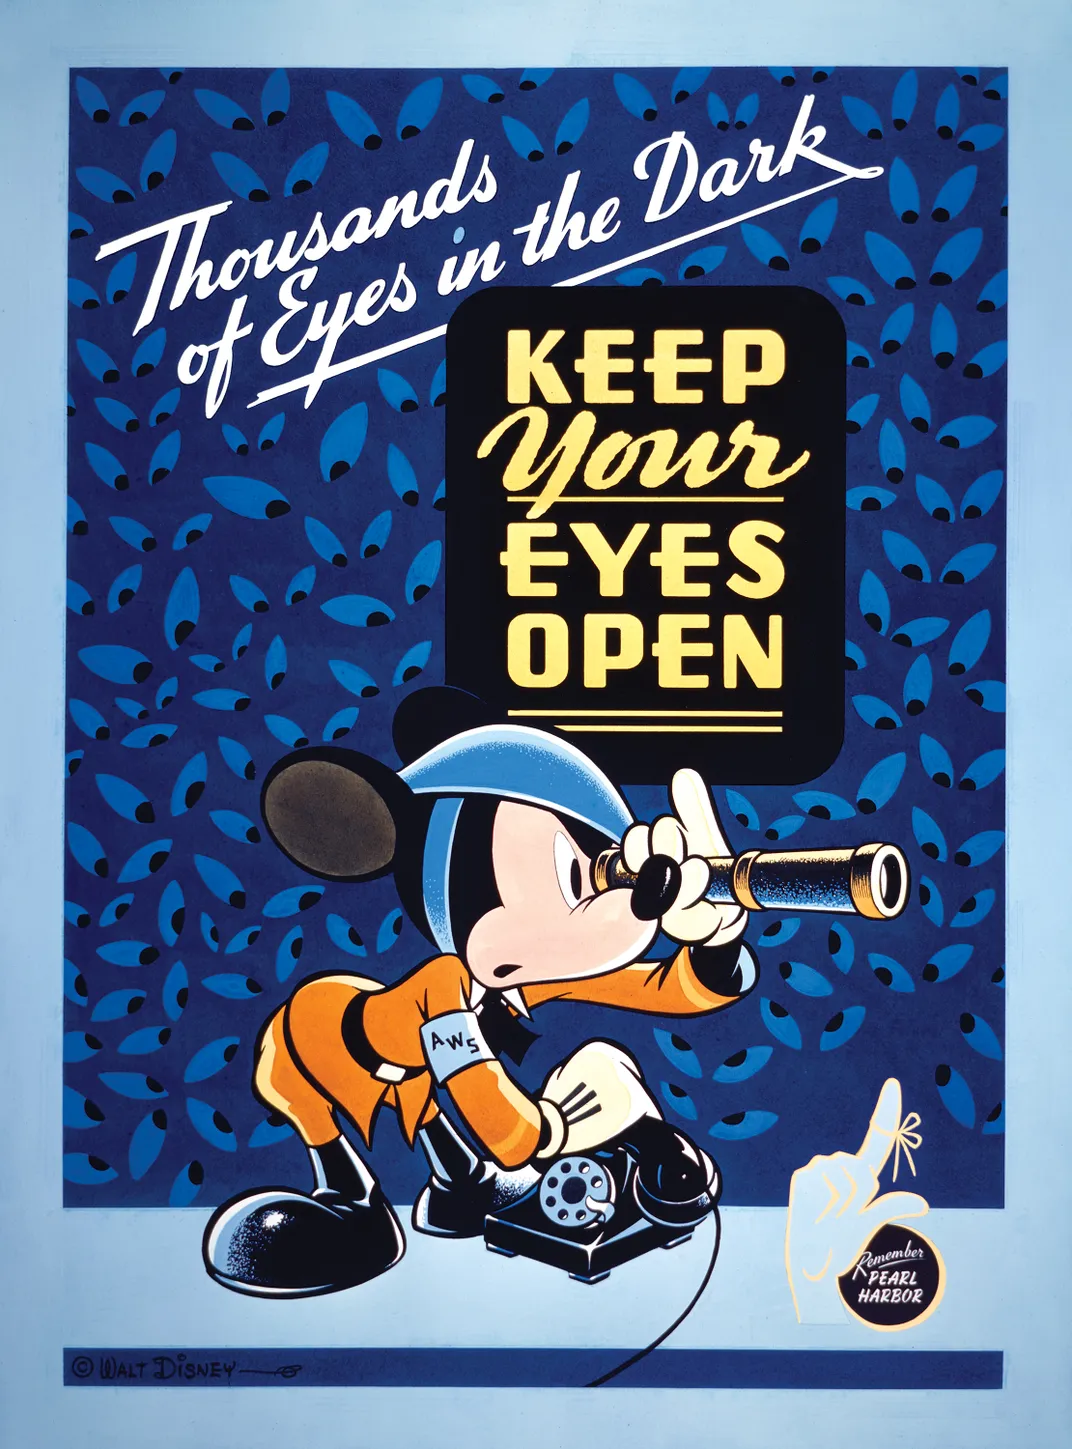 Disney's World War II Propaganda | History | Smithsonian Magazine